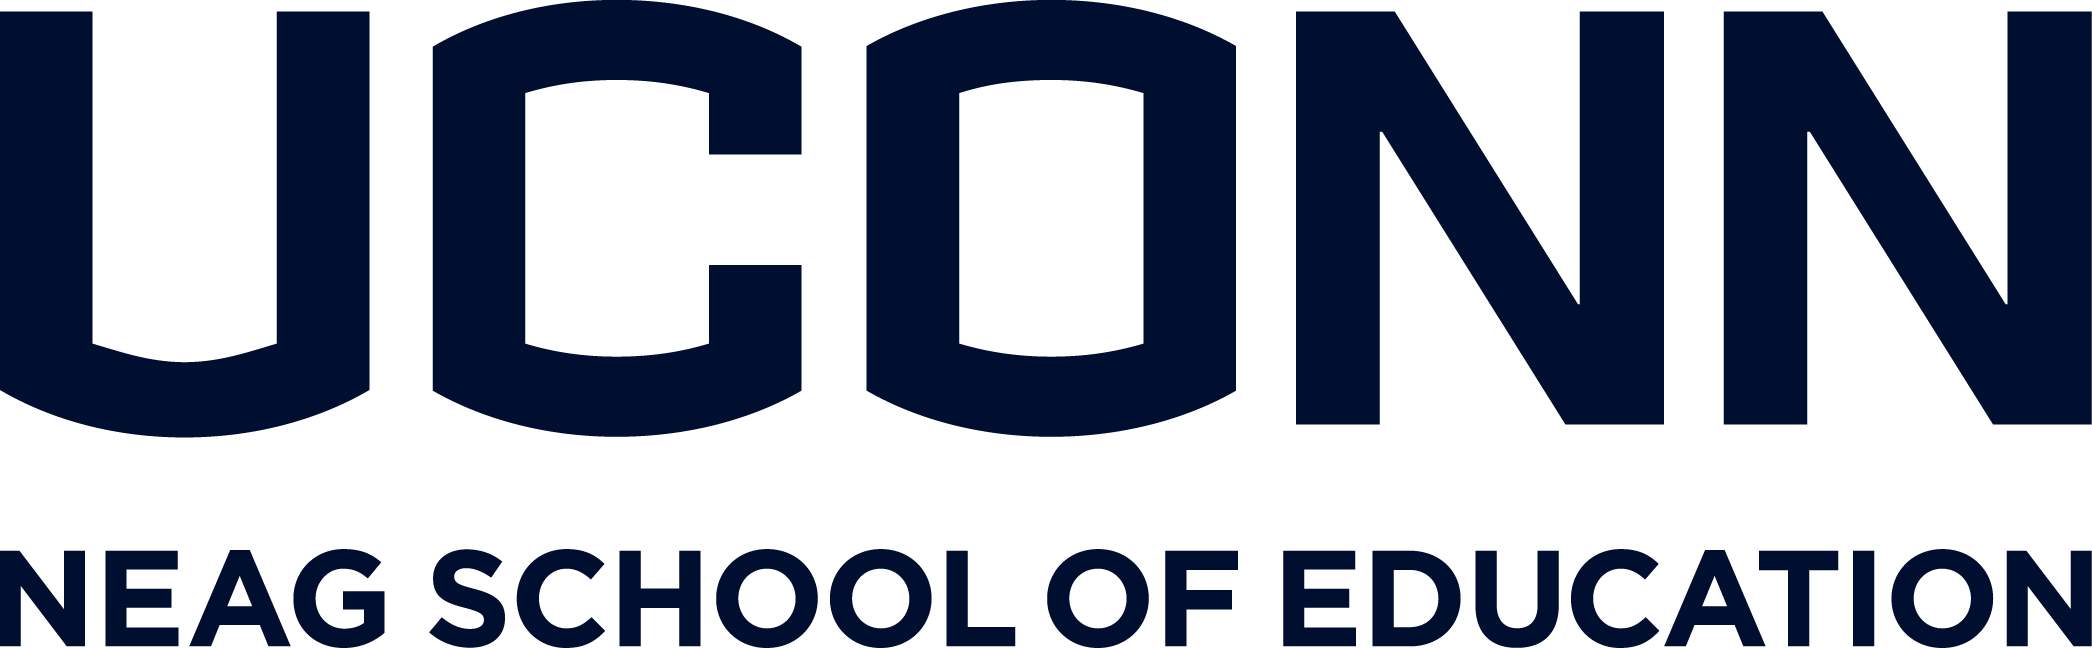 UConn Neag School of Education wordmark